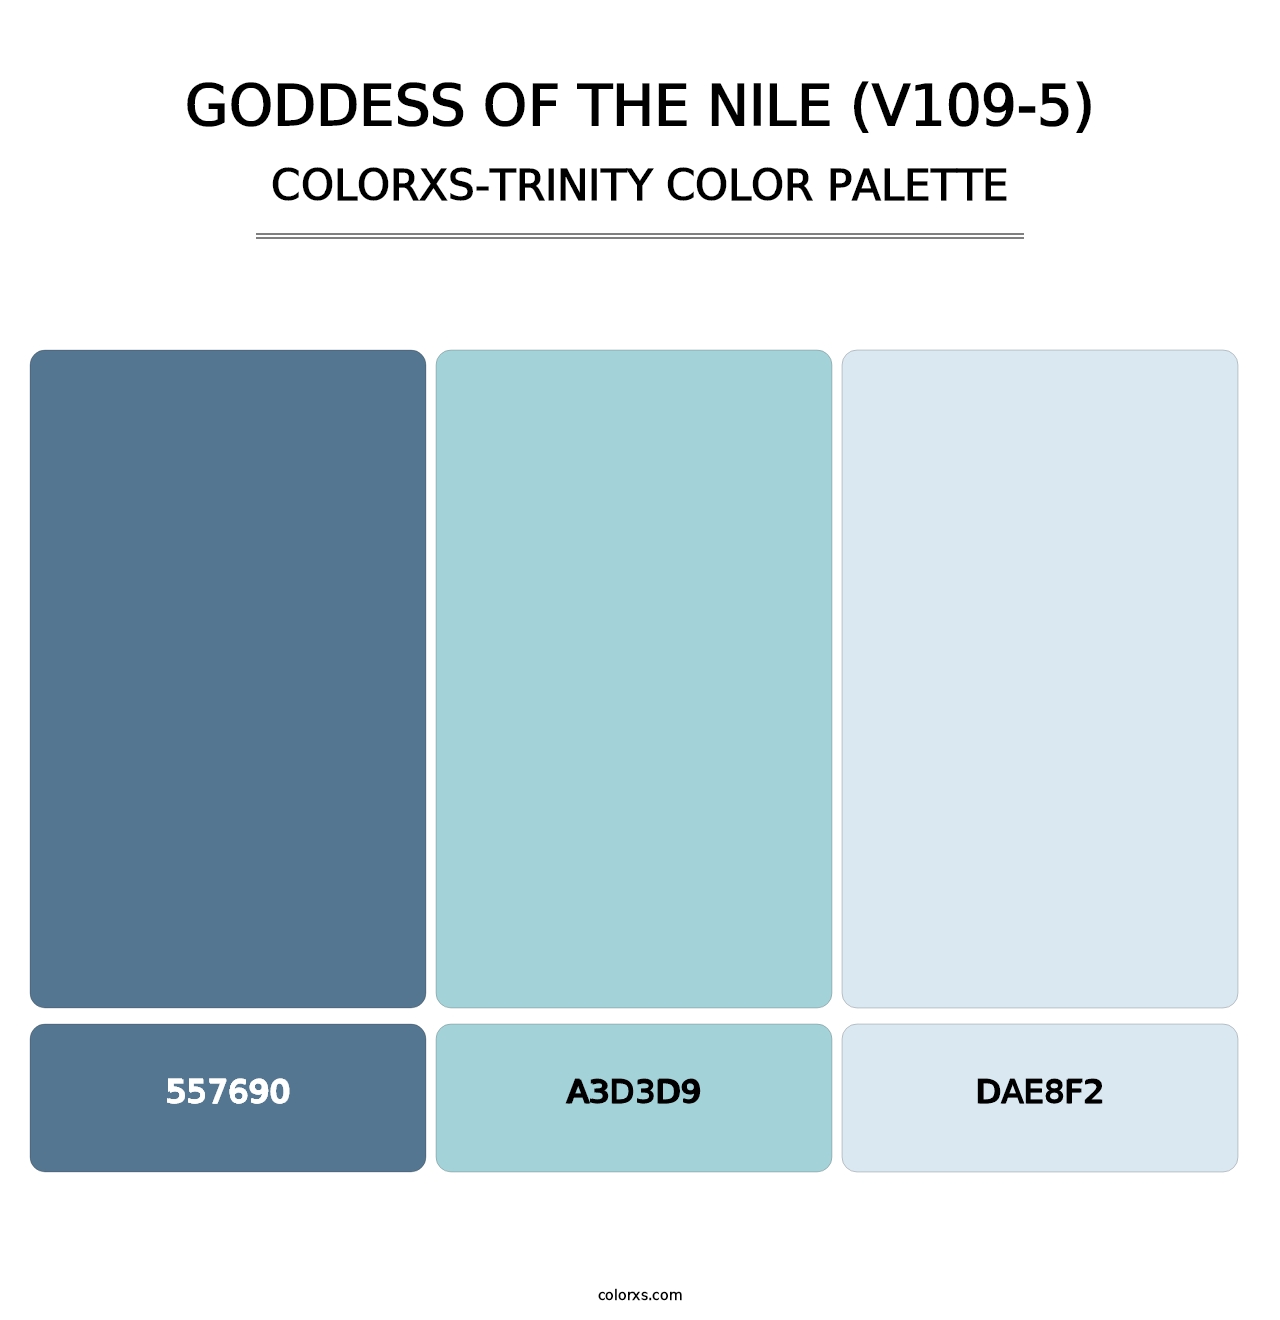 Goddess of the Nile (V109-5) - Colorxs Trinity Palette